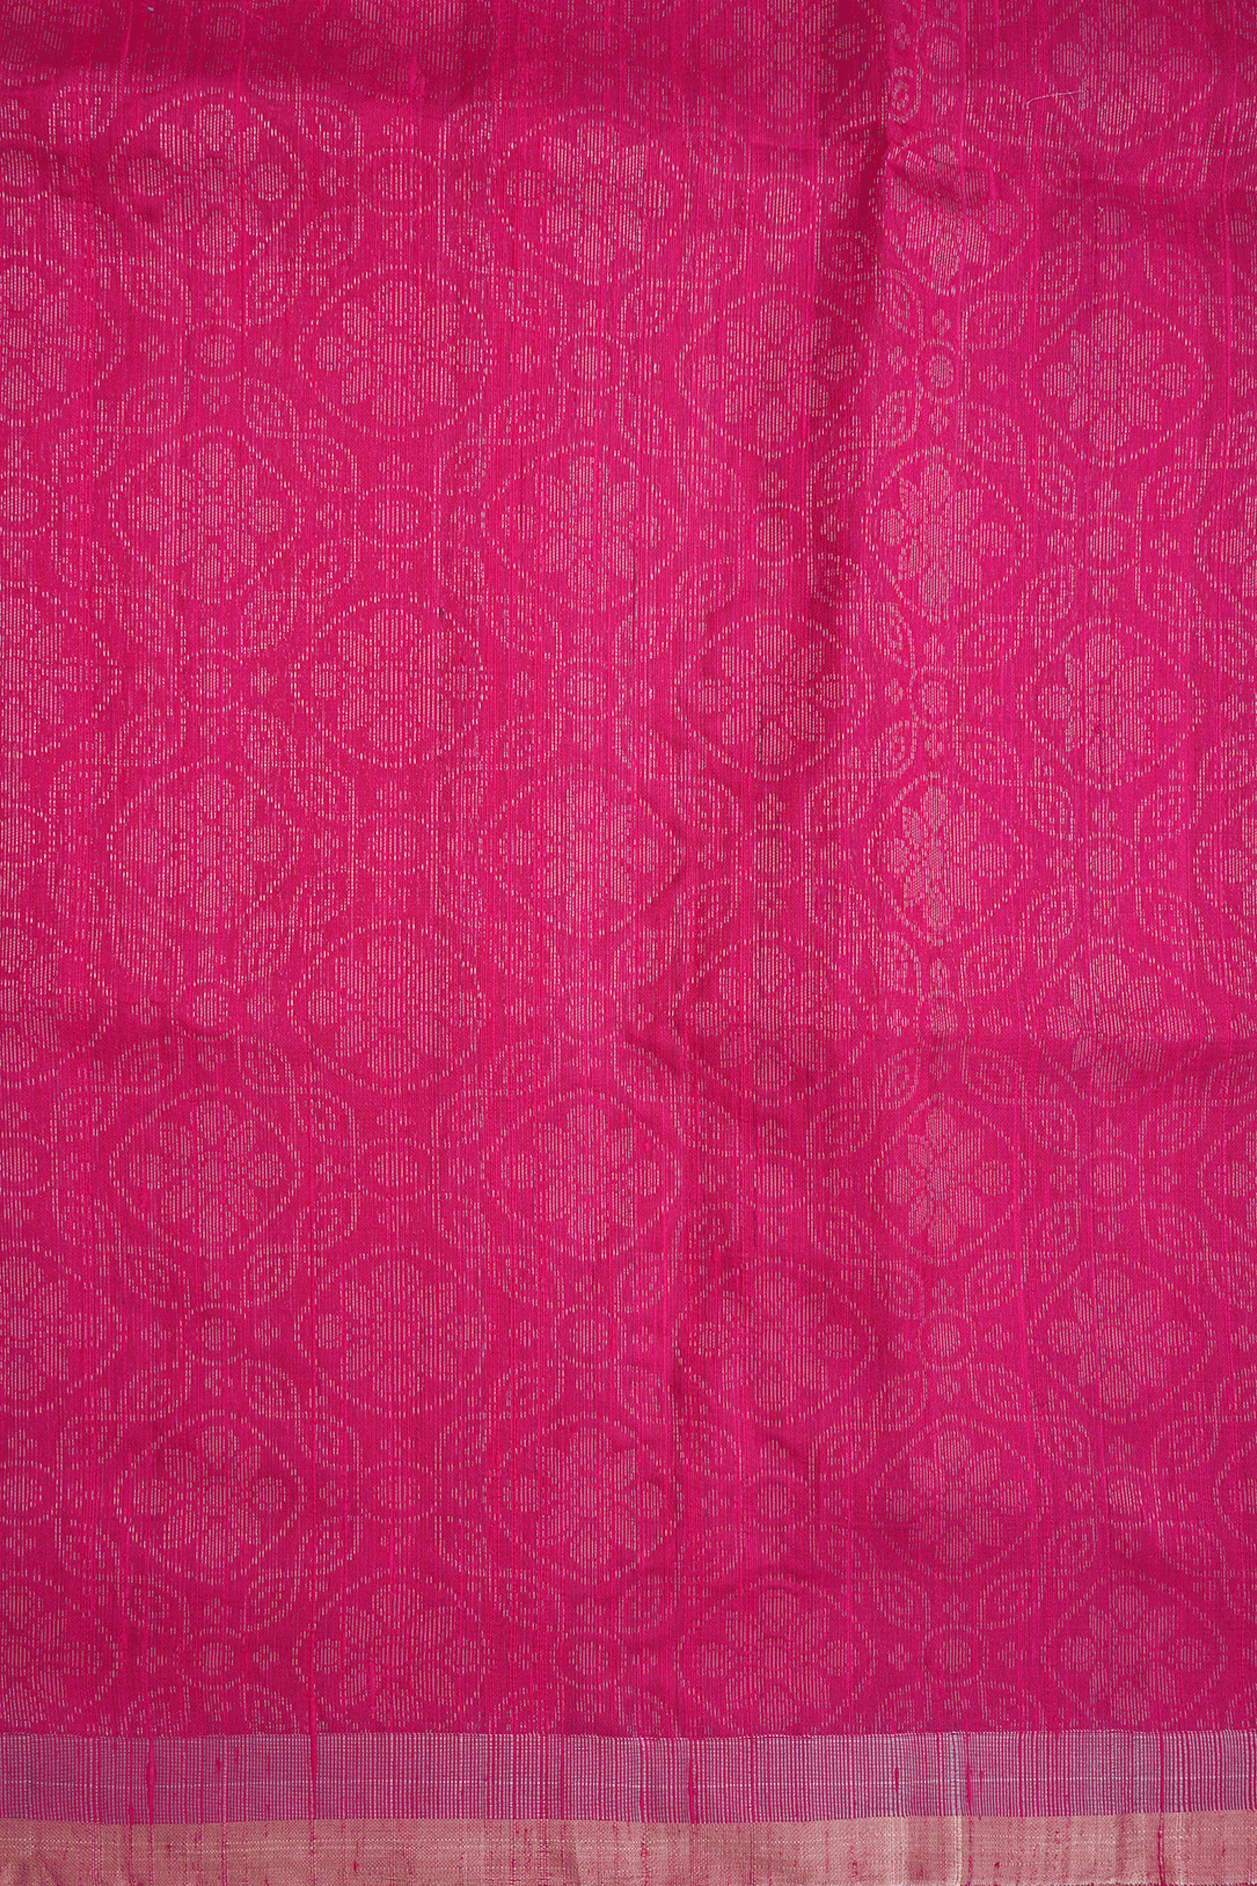 Brocade Zari Design Rani Pink Raw Silk Saree